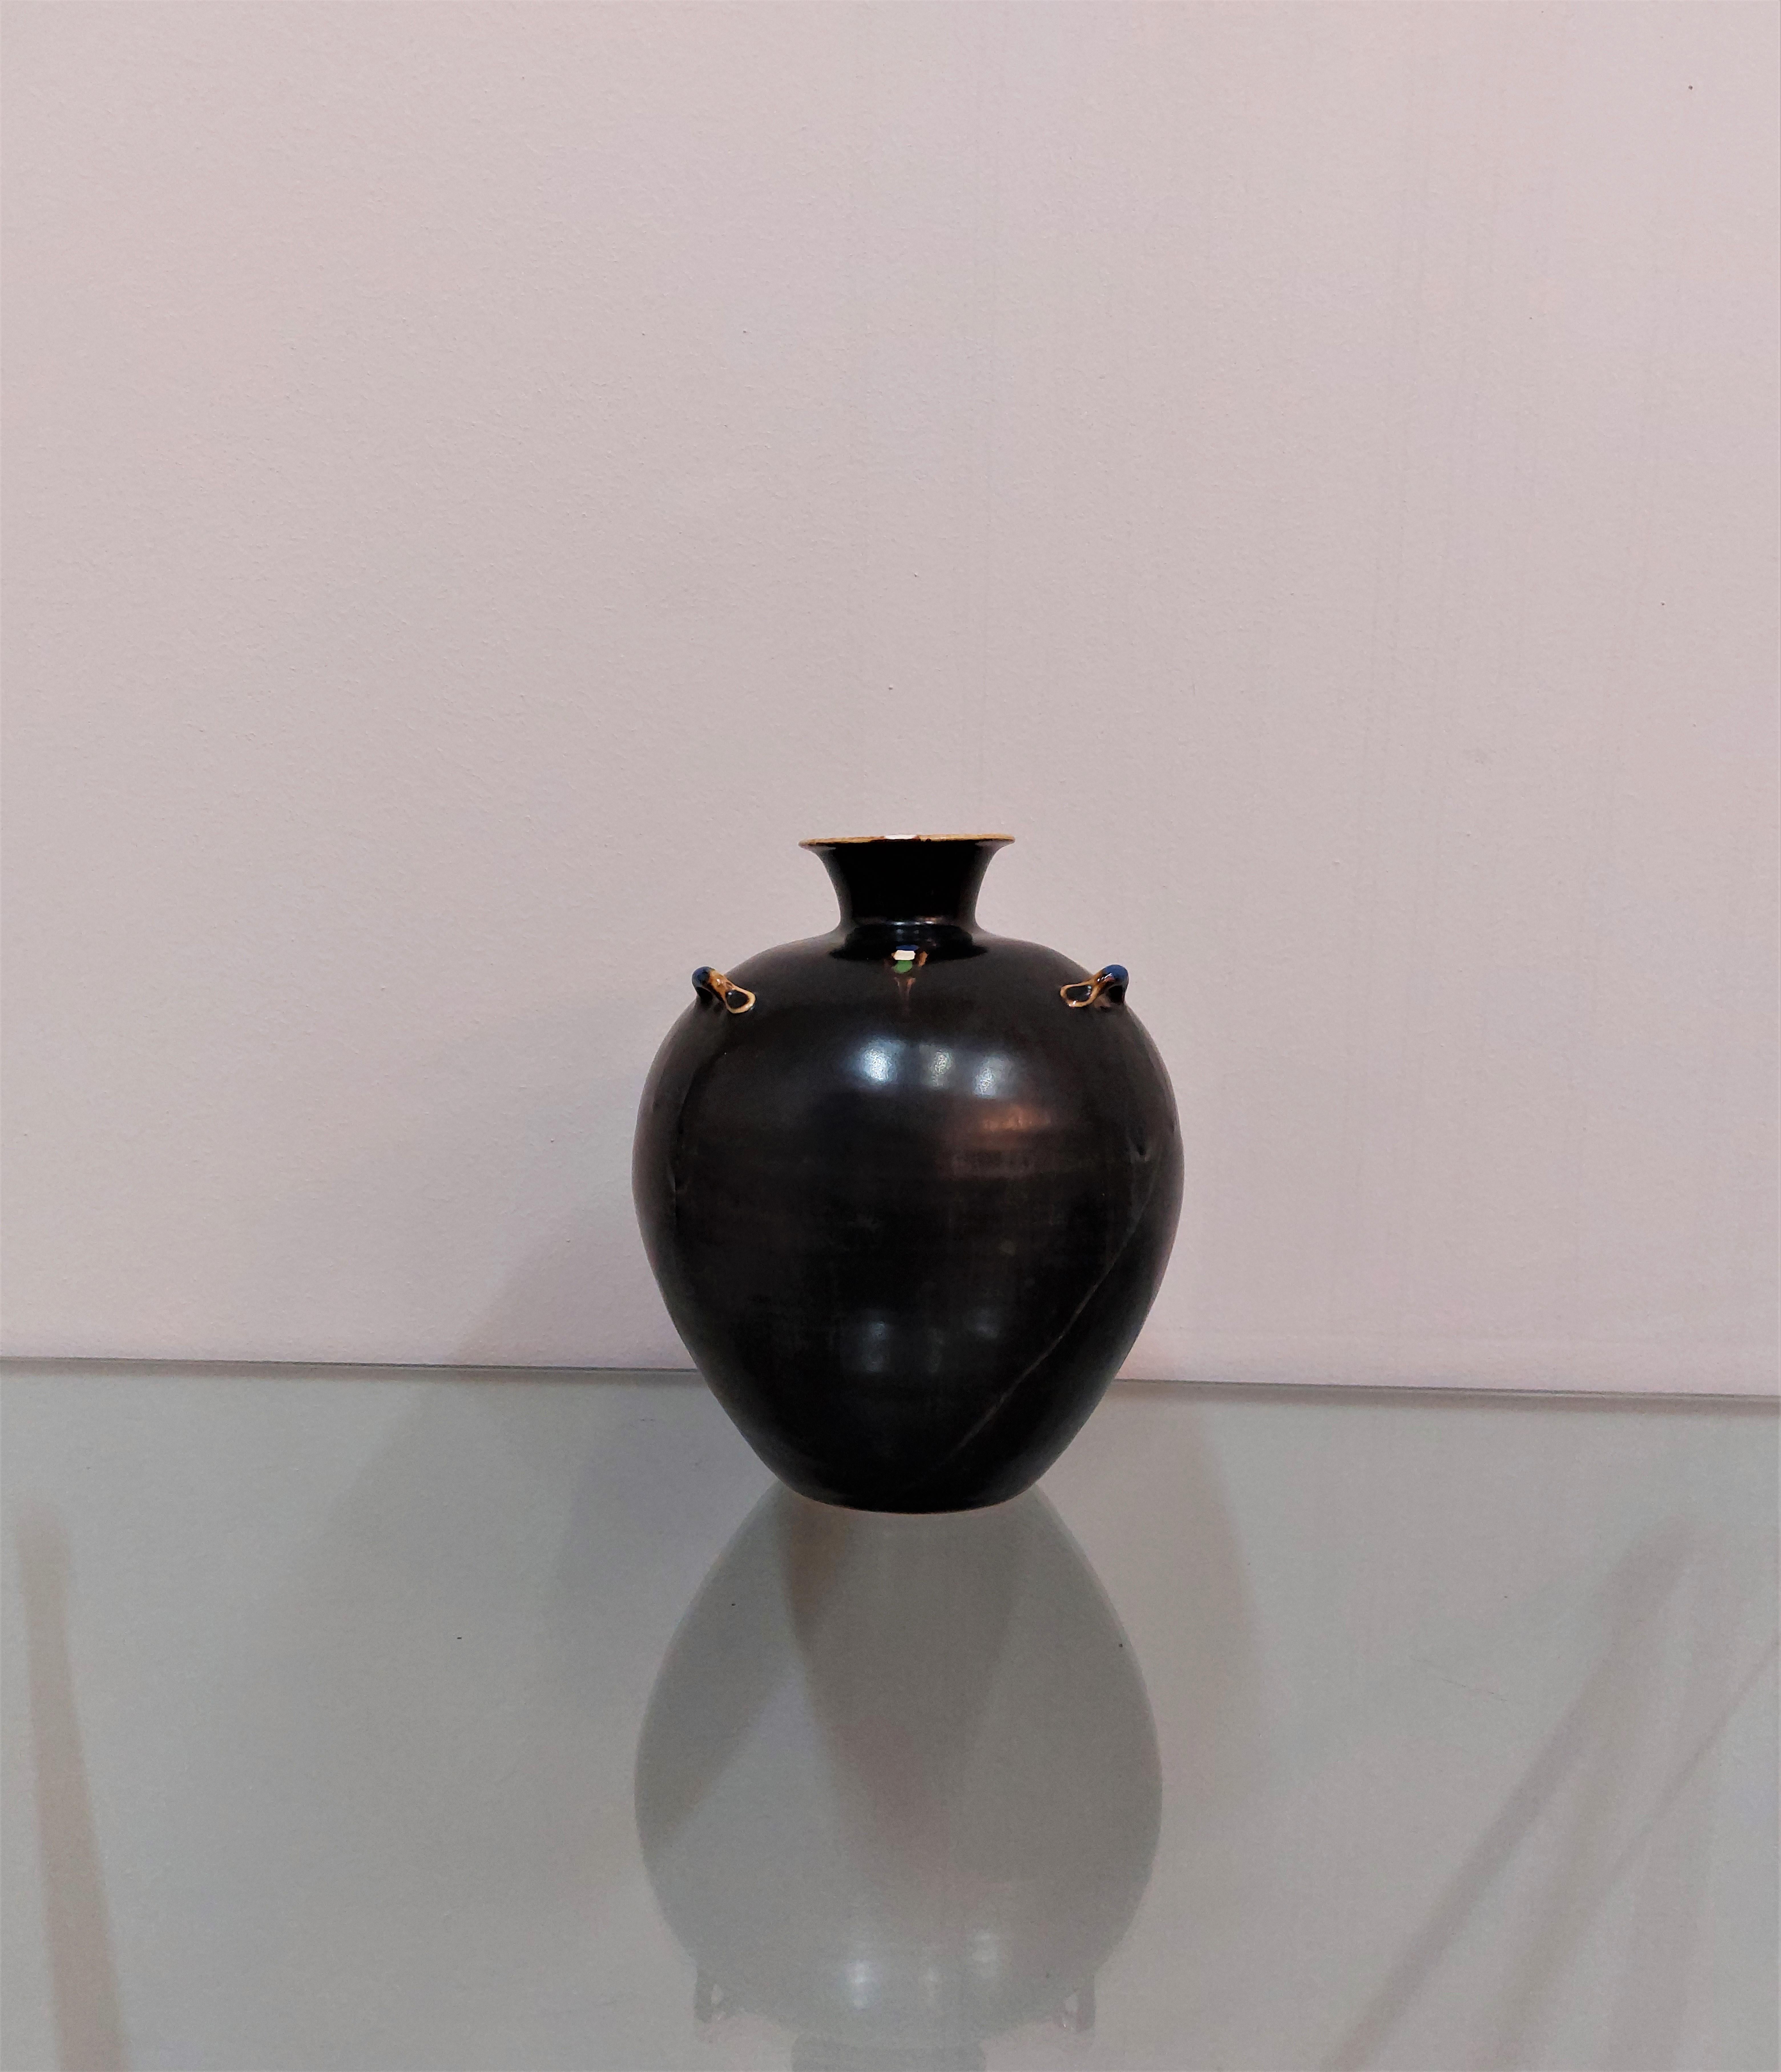 Decorative Object Ceramic Vase Enameled Black Midcentury Italian Design 1950s For Sale 1